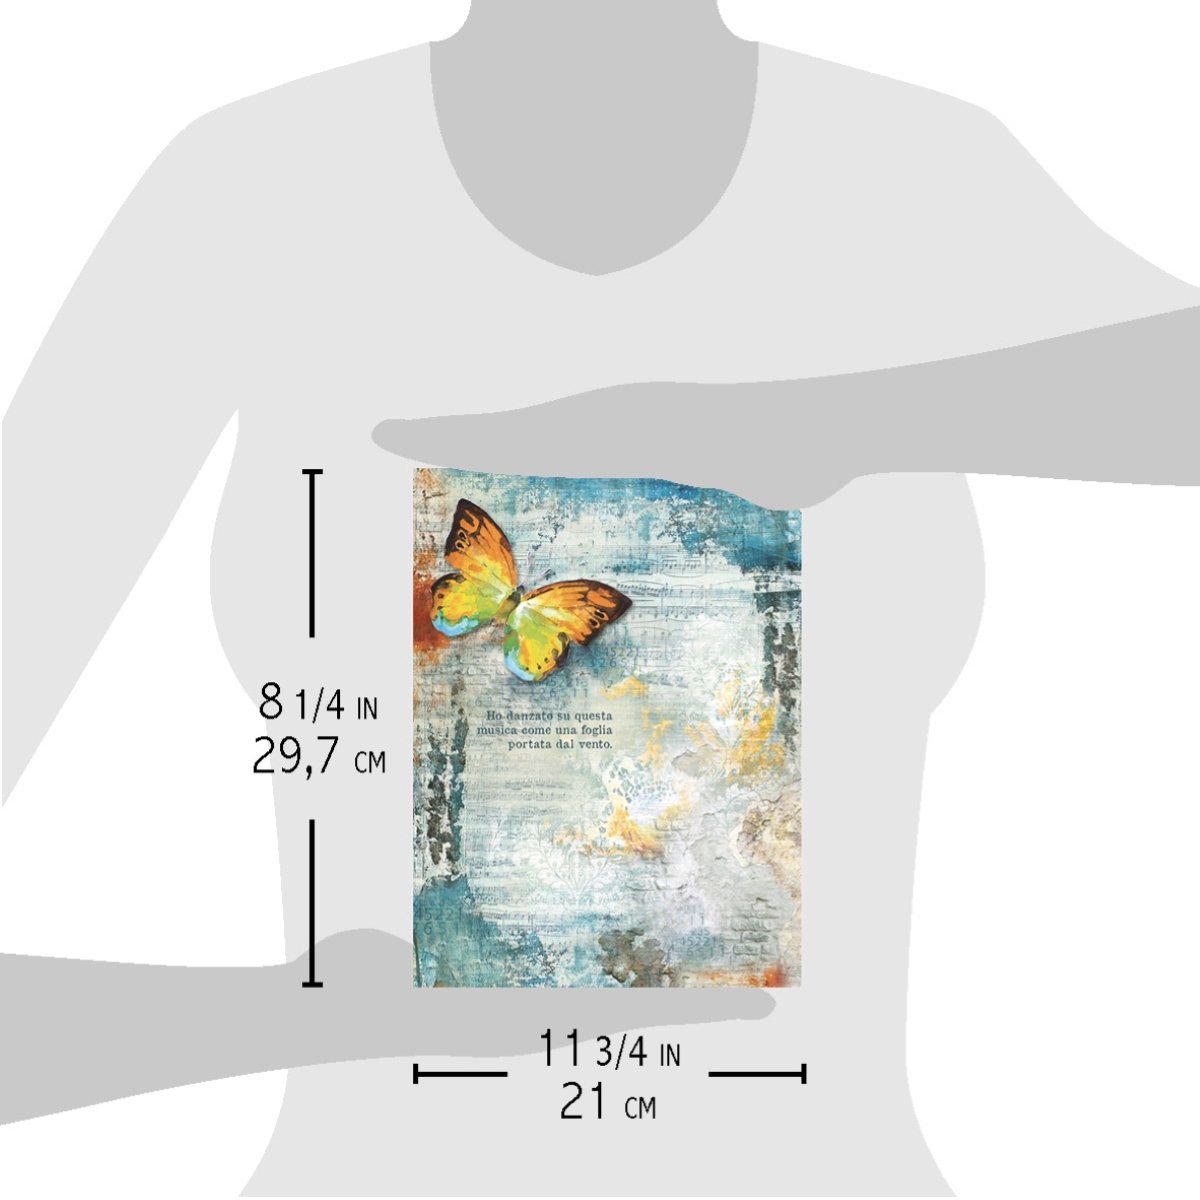 Ciao Bella - Rice Paper - A4 - Single Sheet -  Dancing Butterfly Ciao Bella